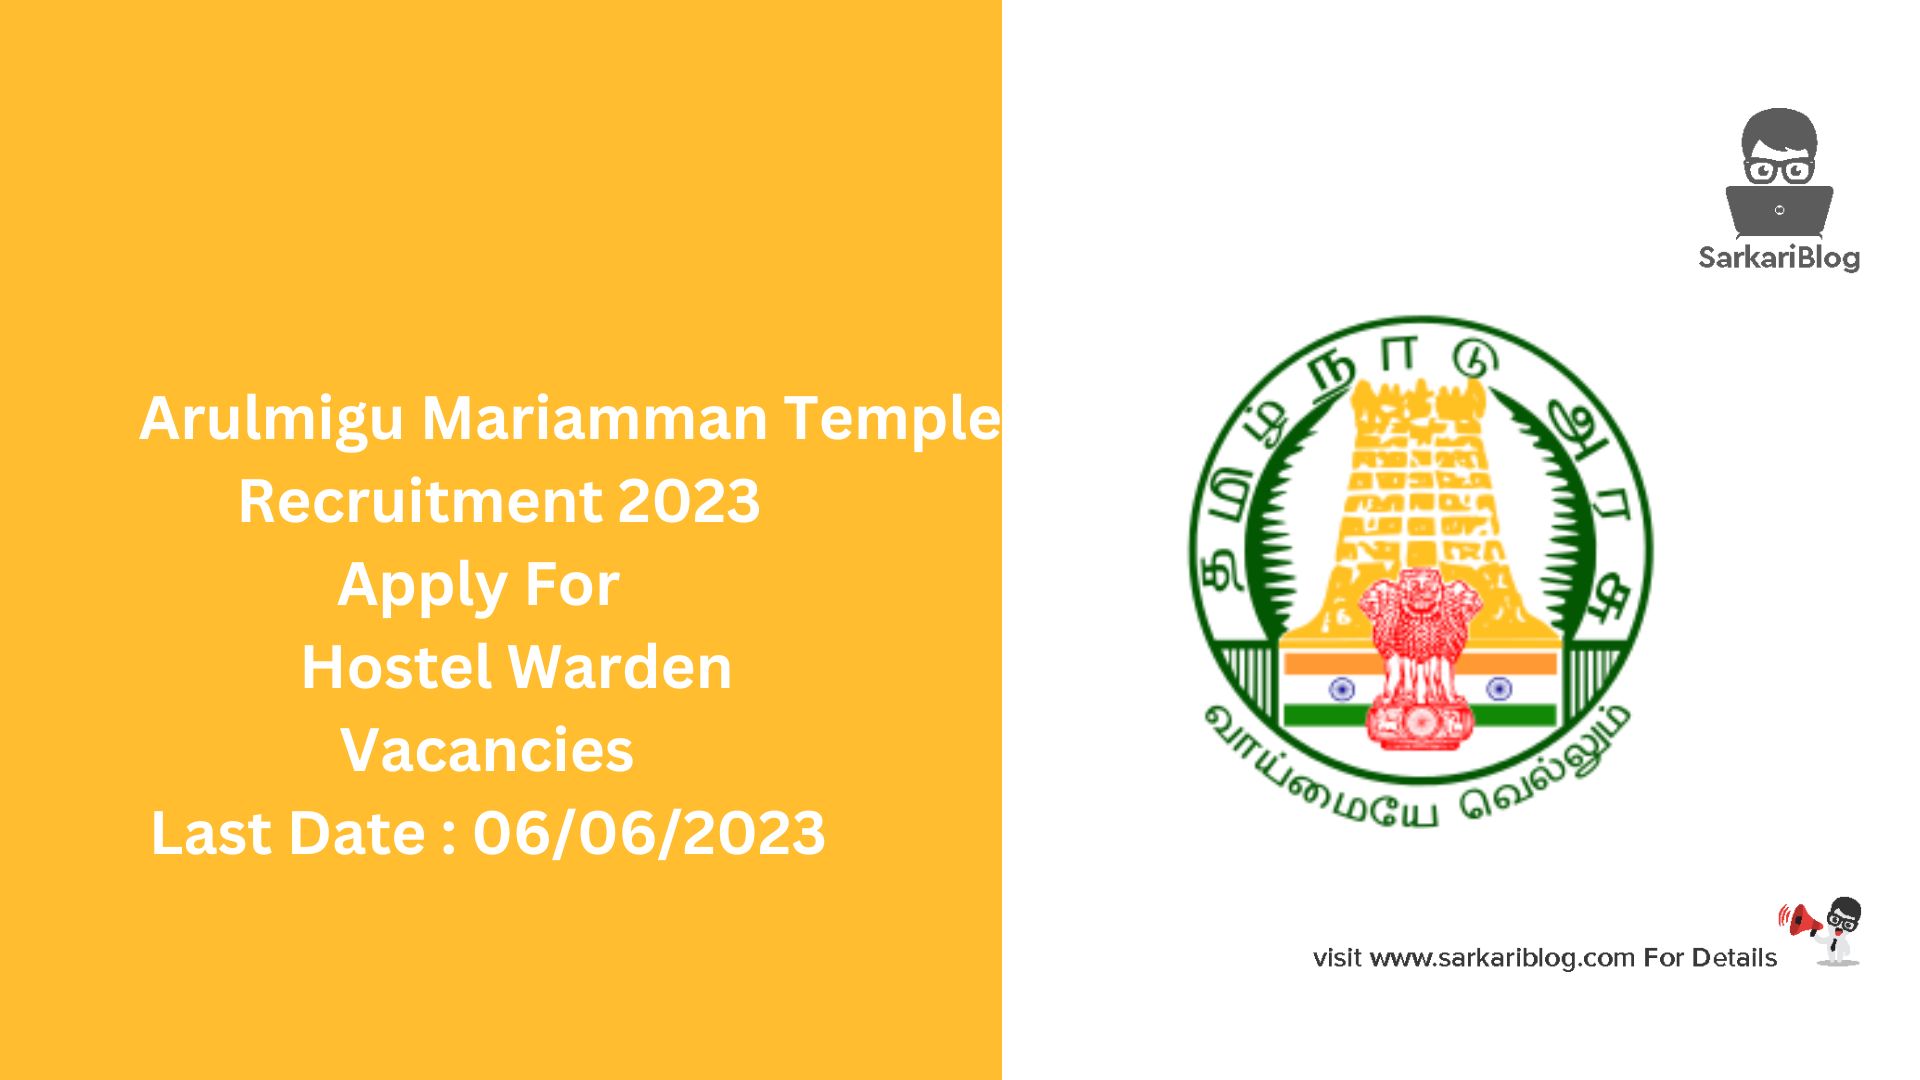 Arulmigu Mariamman Temple Recruitment 2023